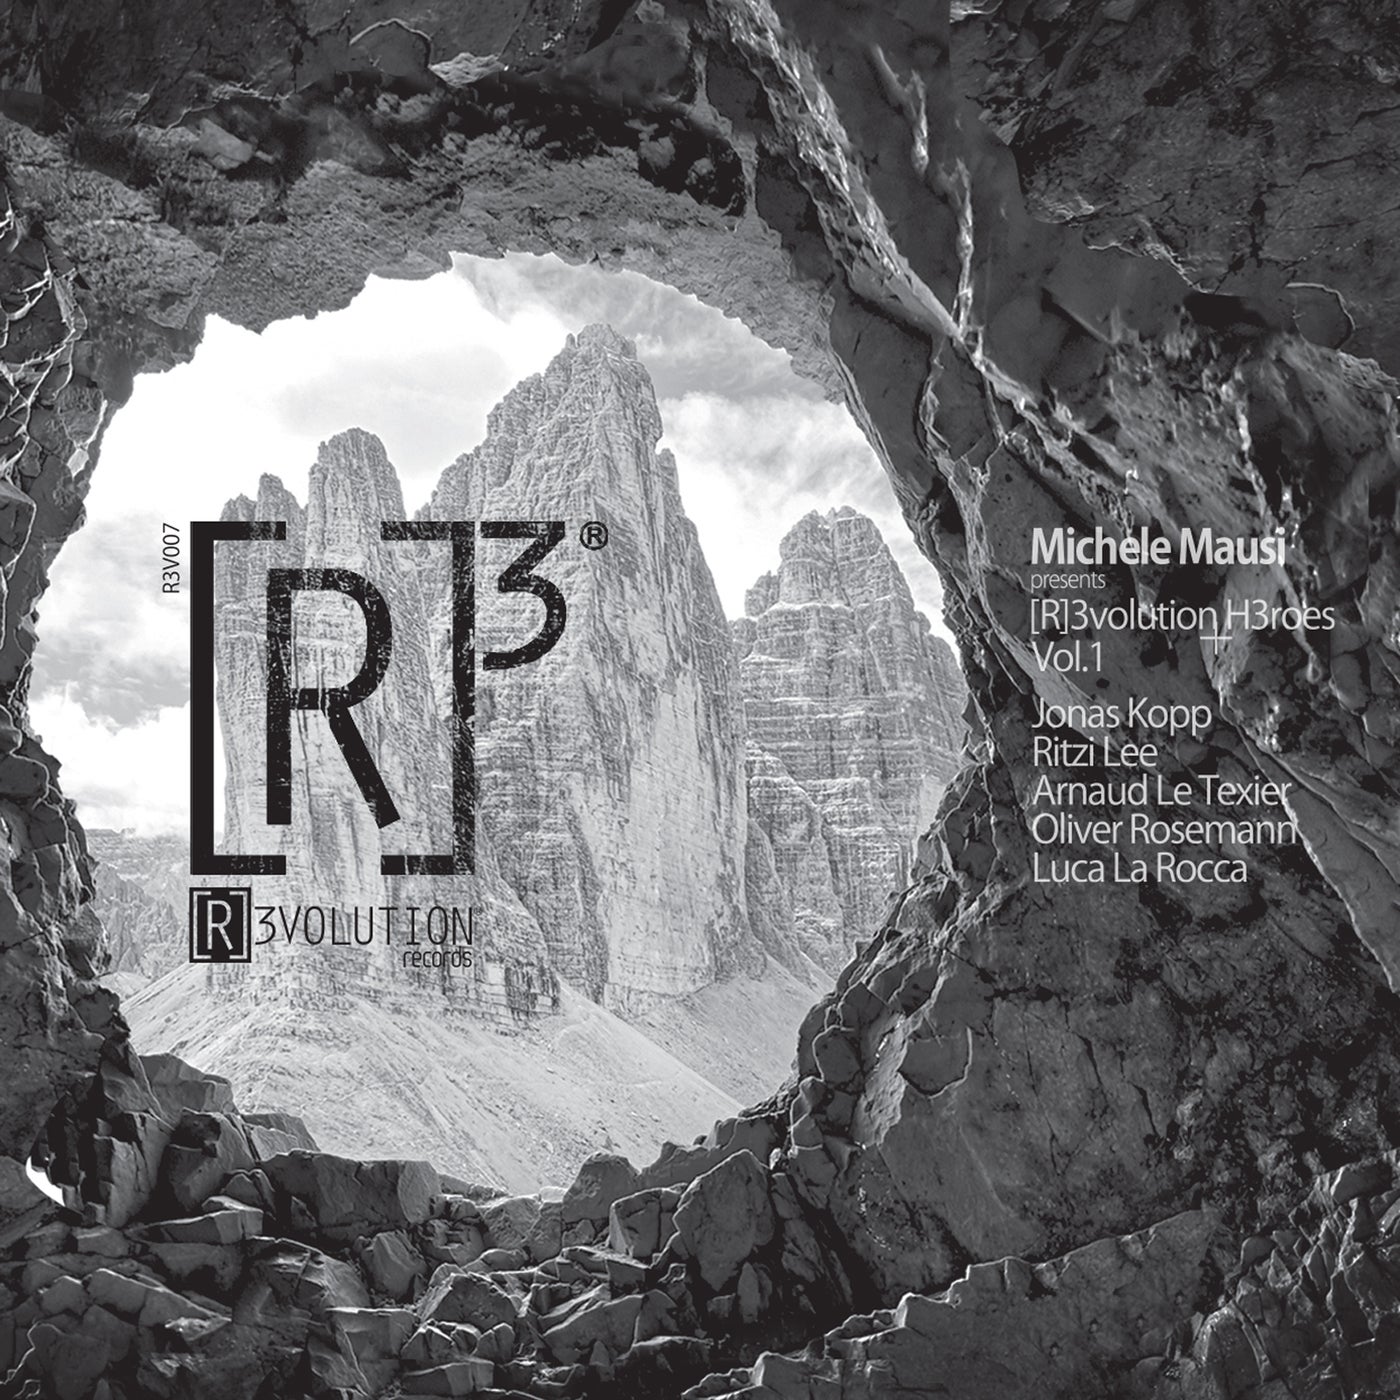 image cover: Ritzi Lee, Oliver Rosemann, Michele Mausi, Jonas Kopp, Arnaud Le Texier, Luca La Rocca - [R]3volution H3roes Vol.1 / R3V007